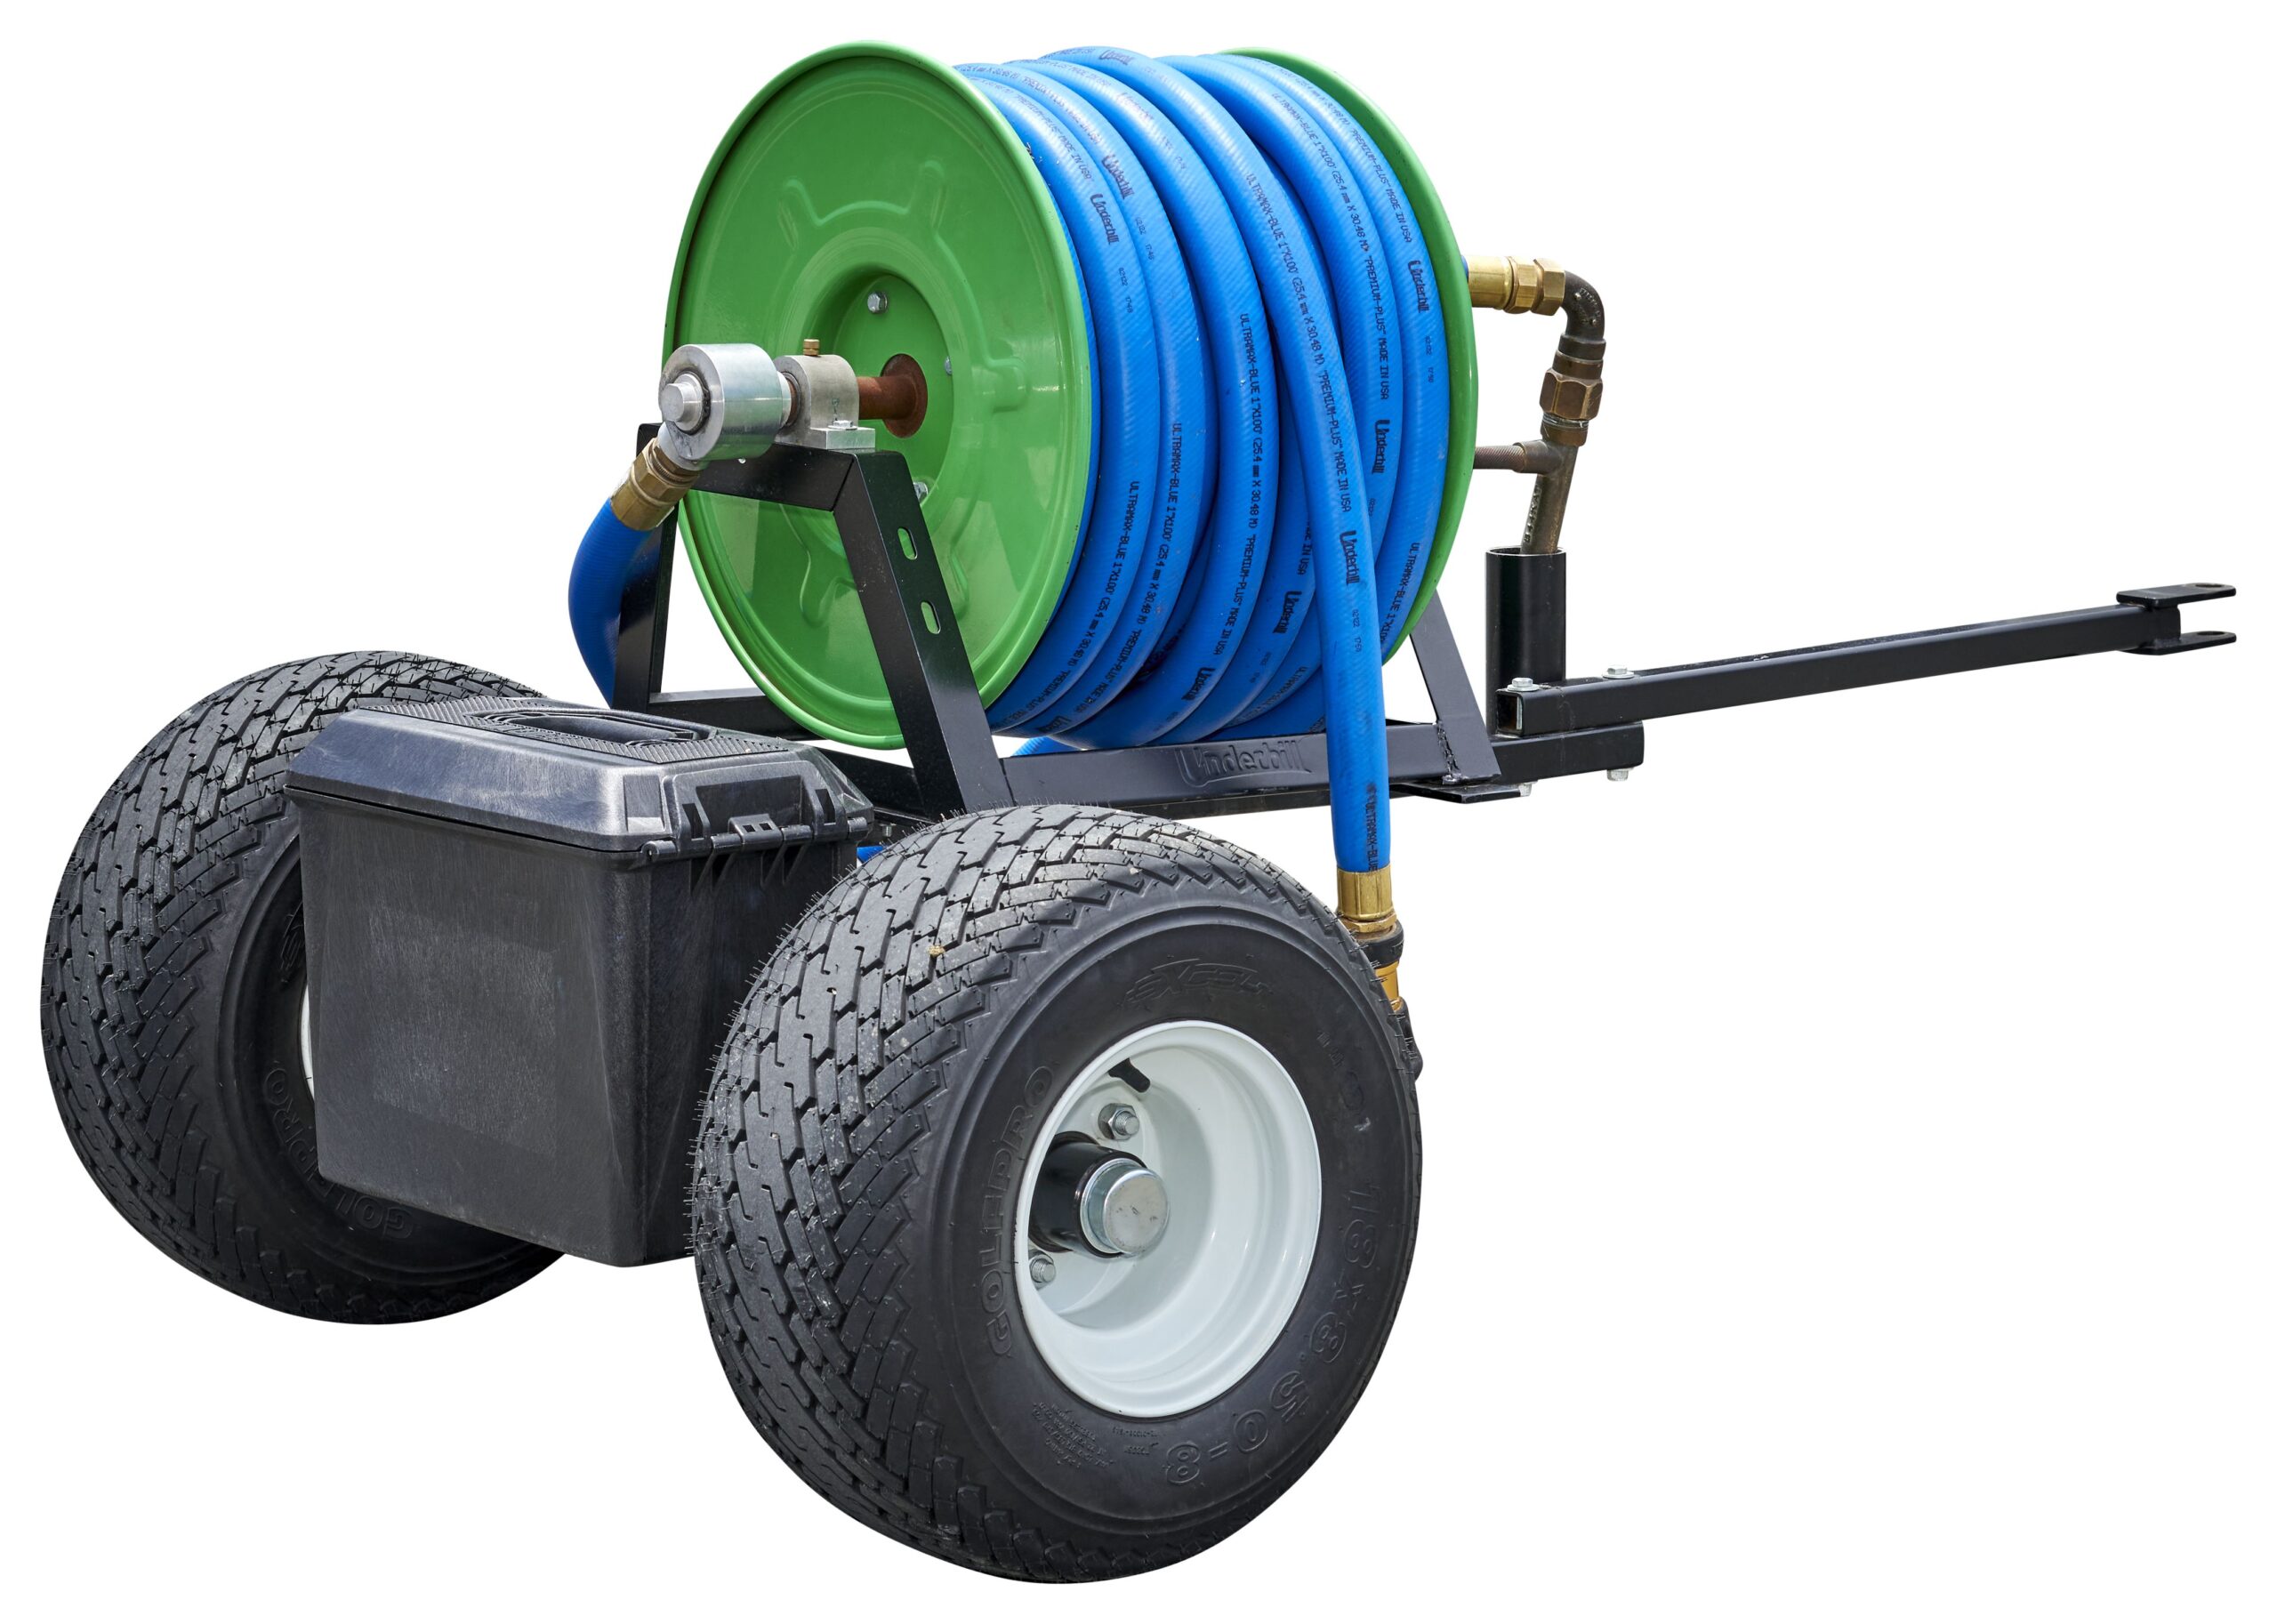 Utility hose reel box for Gardens & Irrigation 